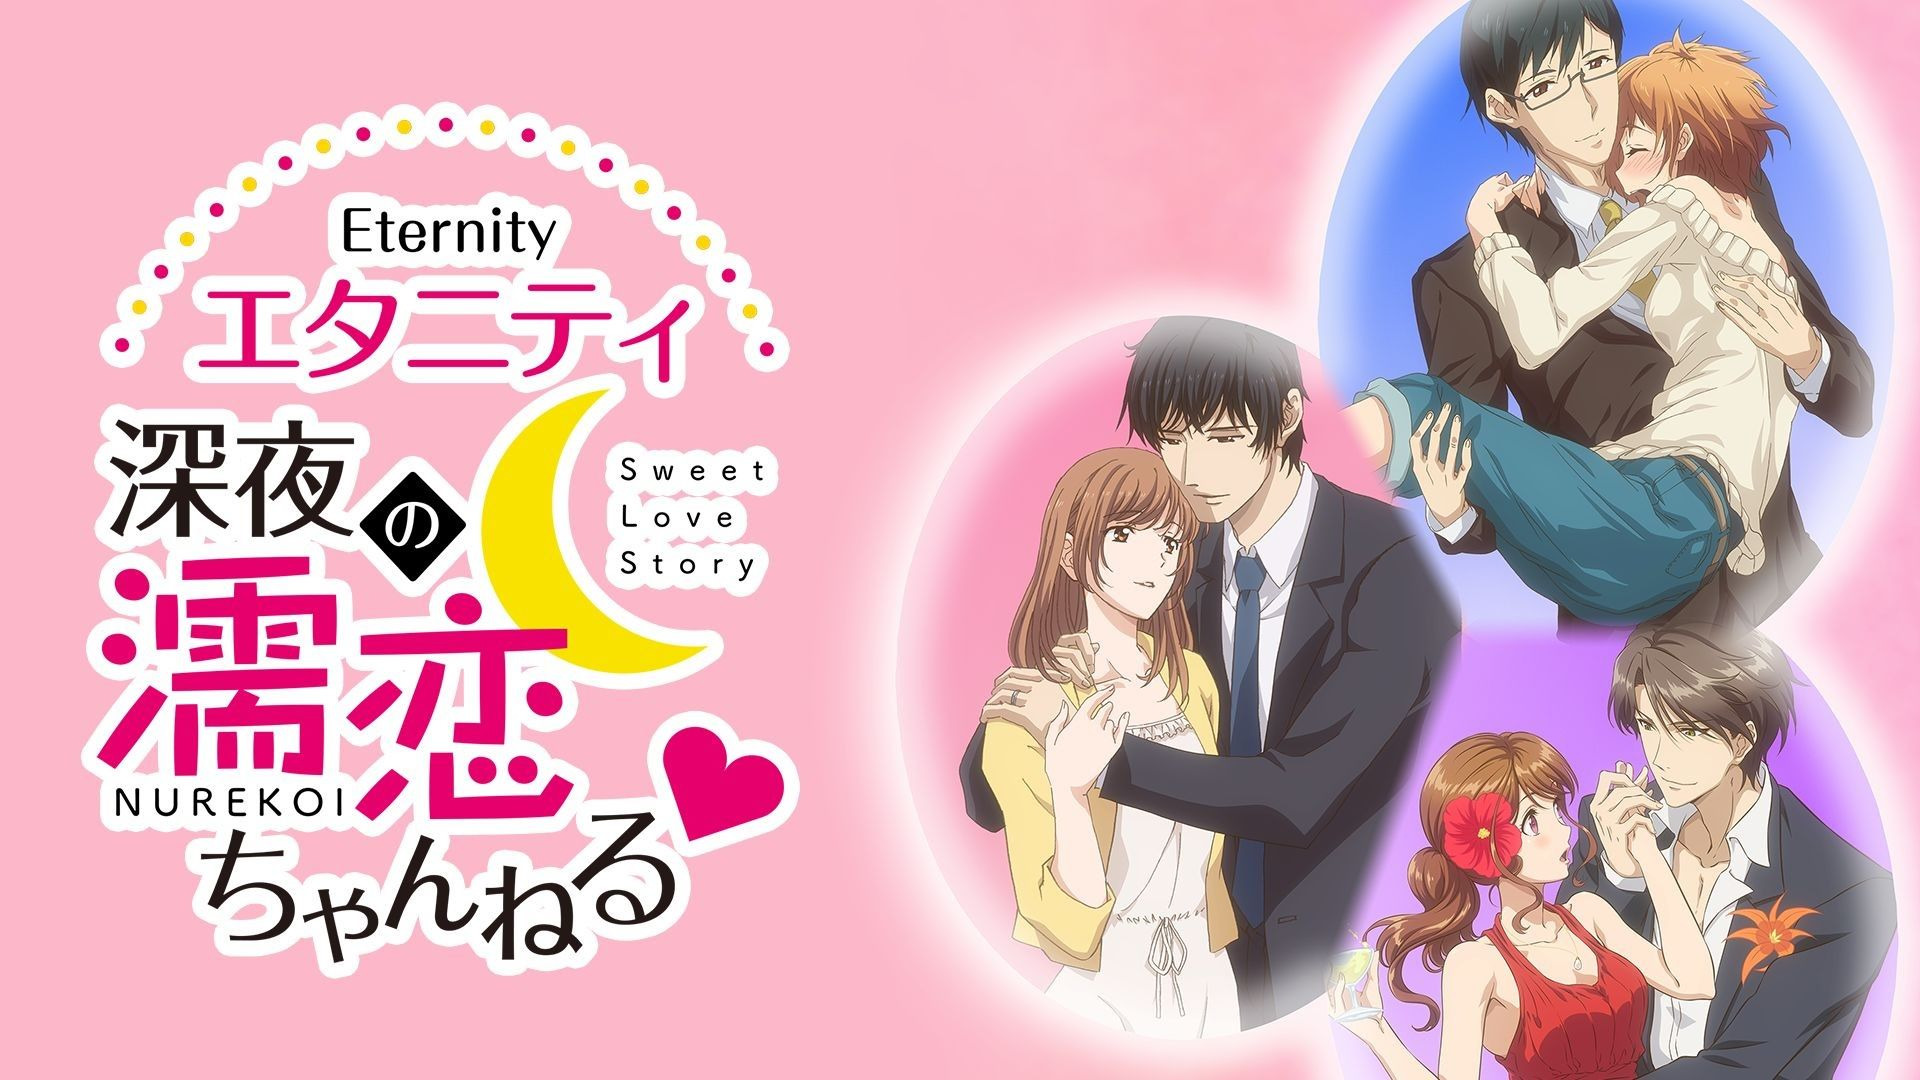 Anime Eternity: Sweet Love Story